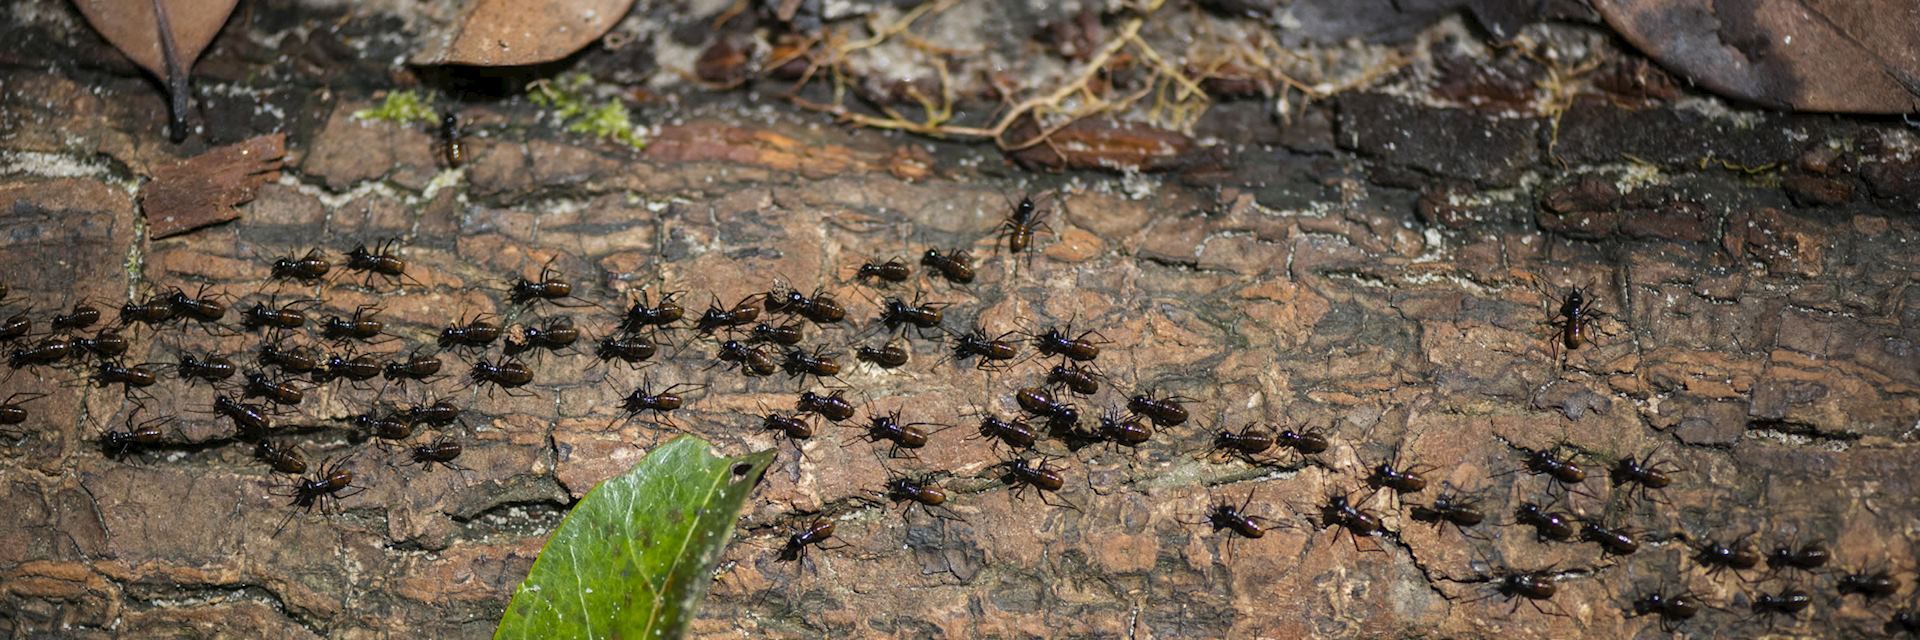 Termites, Tanjung Datu National Park